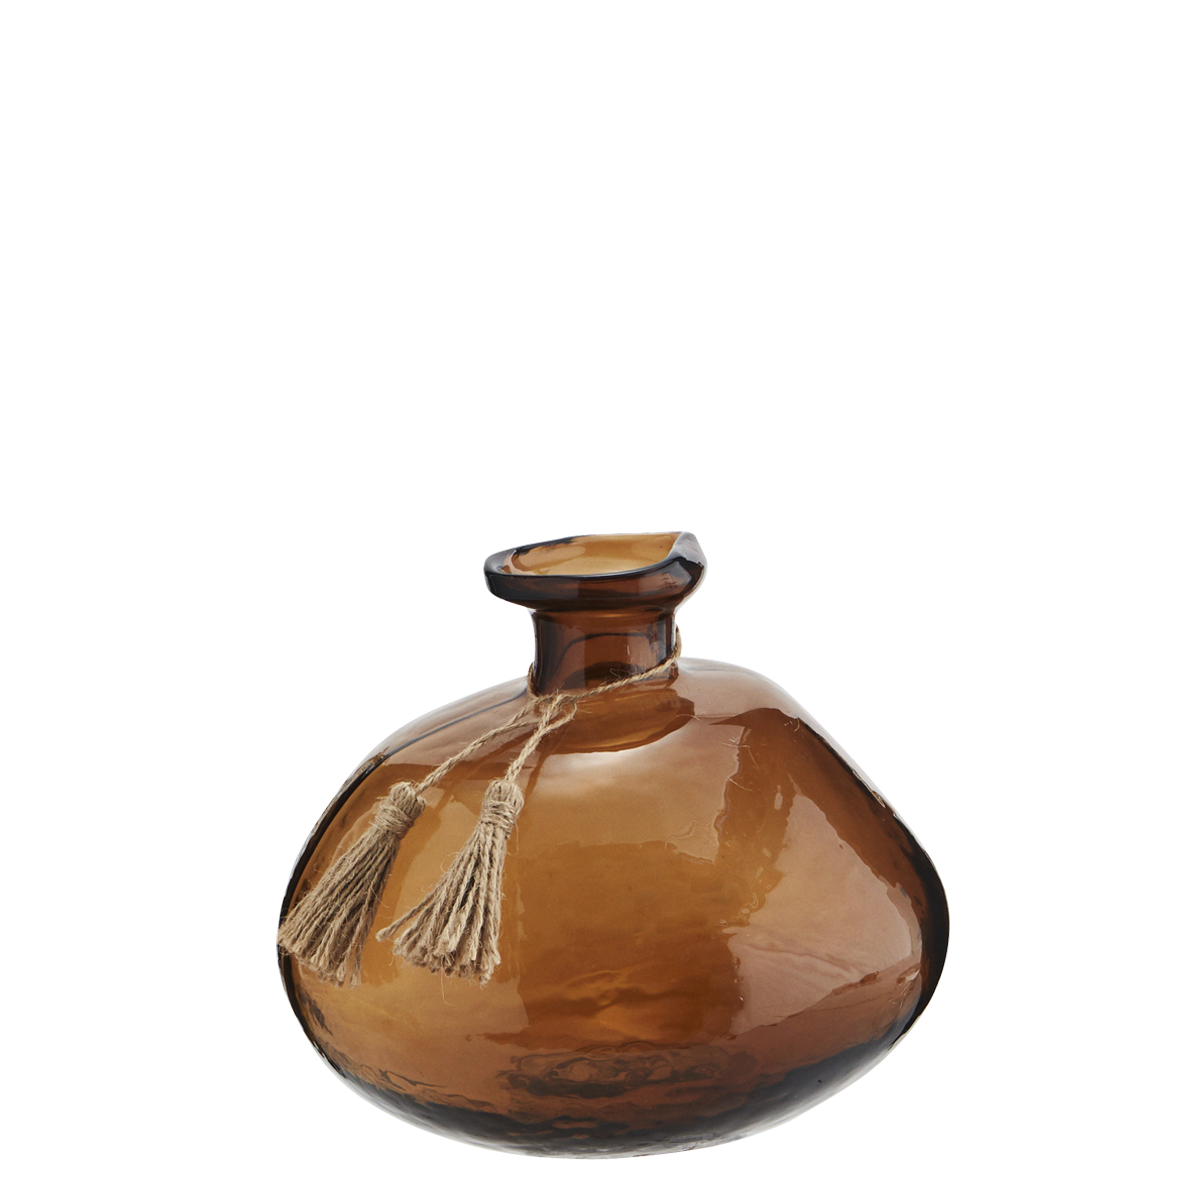 Organic shaped glass vase w/ tassels